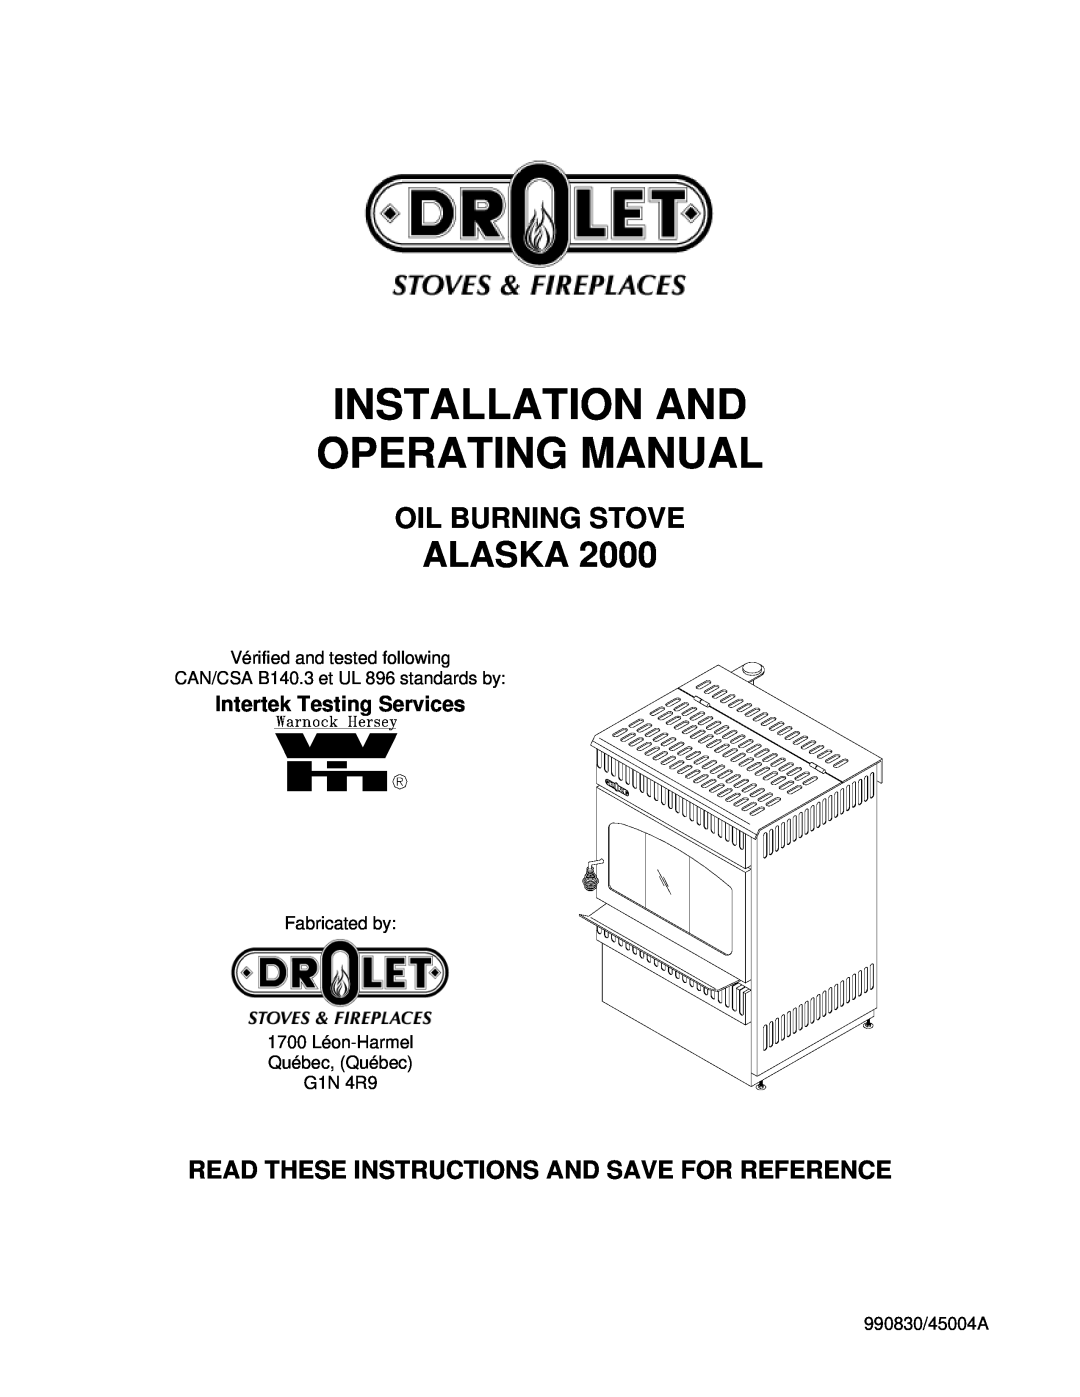 Drolet ALASKA 2000 manual Installation And Operating Manual, Alaska, Oil Burning Stove, Intertek Testing Services 